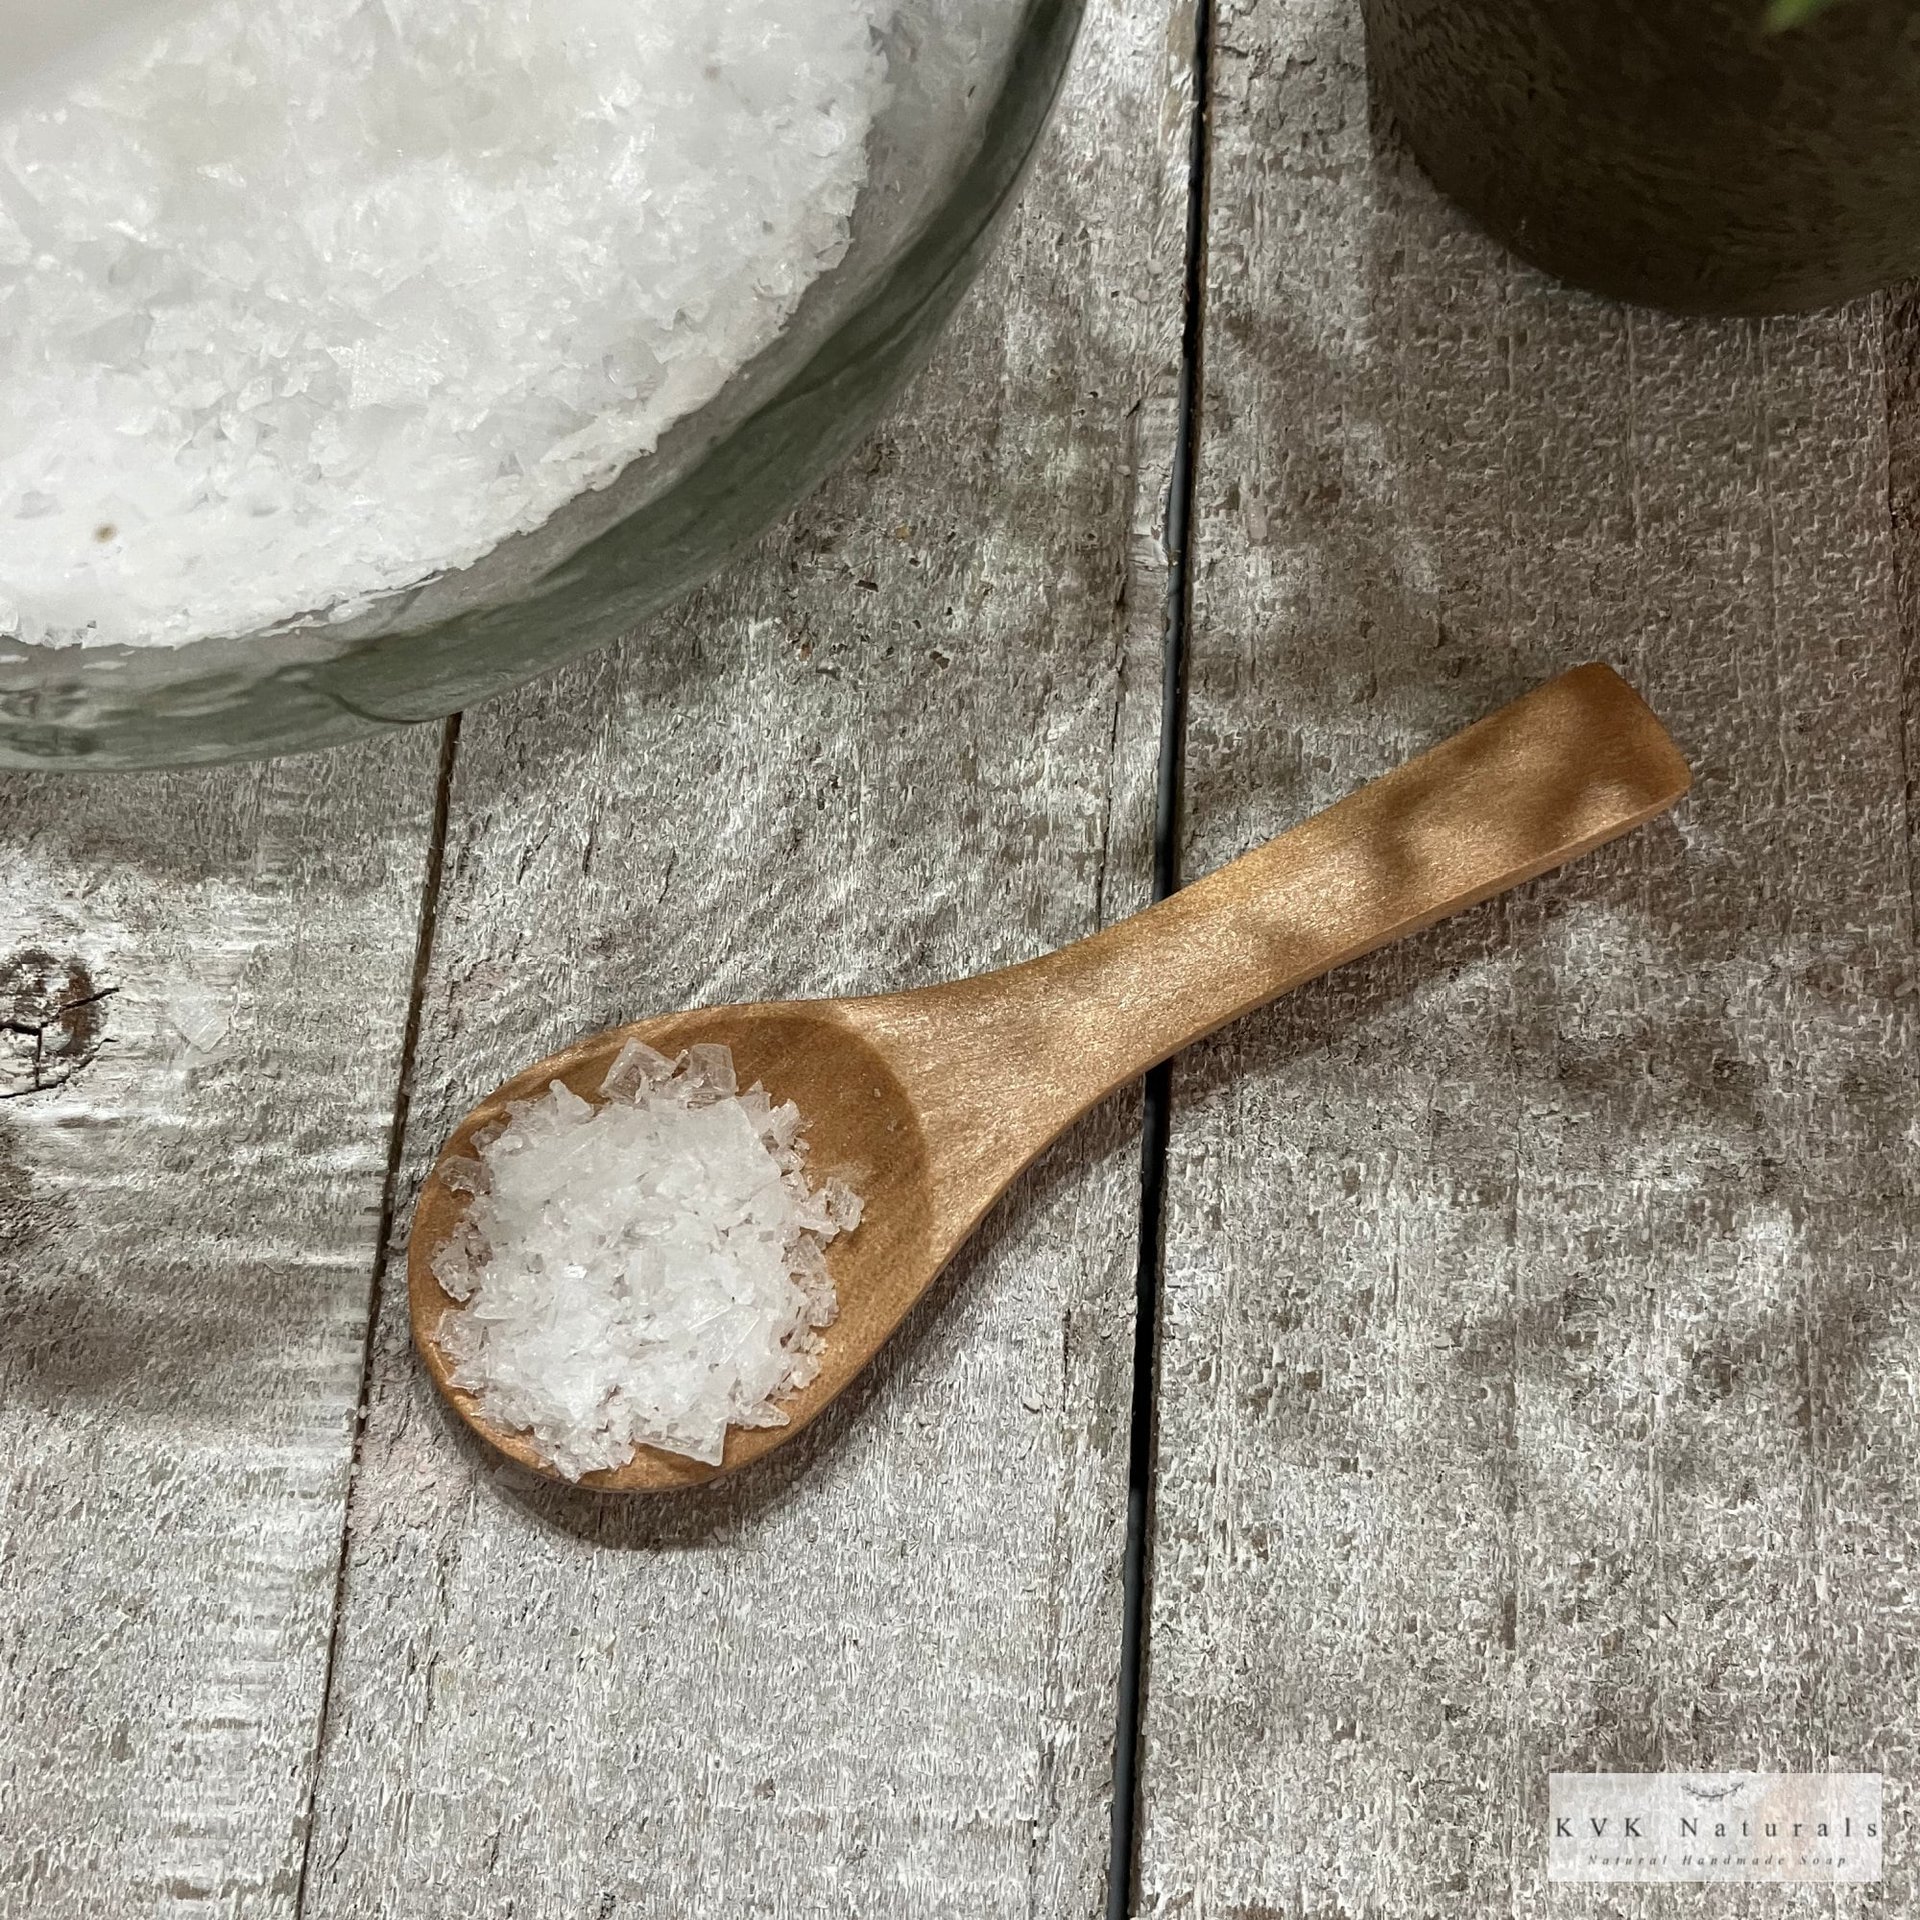 Bath Salt Spoon - Wooden Spoon, Salt Spoon, Small Wooden Spoons